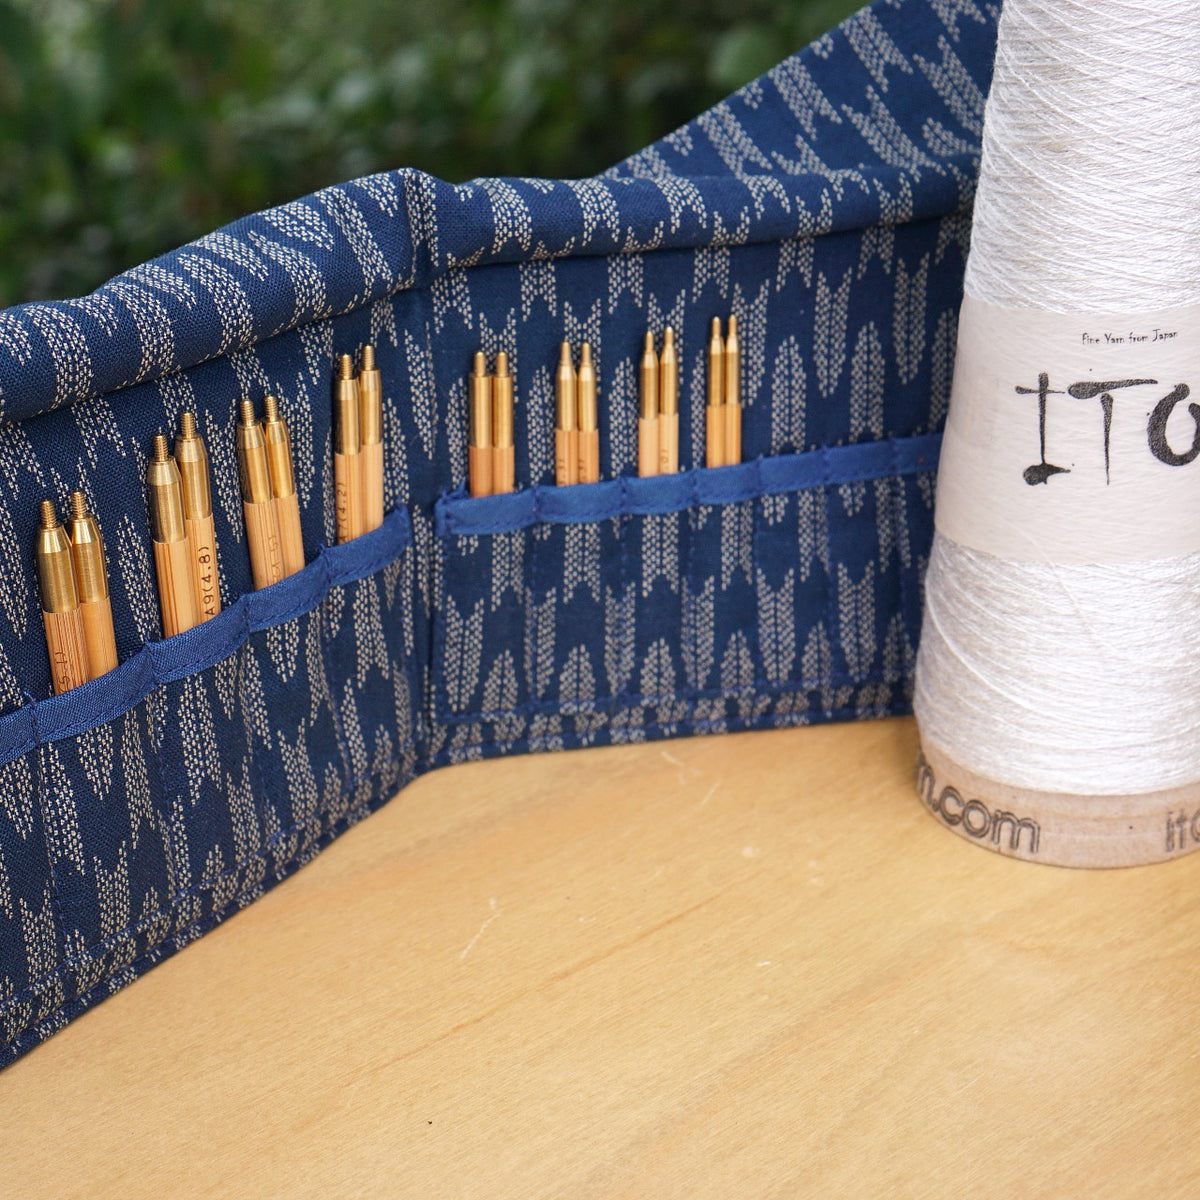 ITO Interchangeable Needles in fabric case - Thread Collective Australia